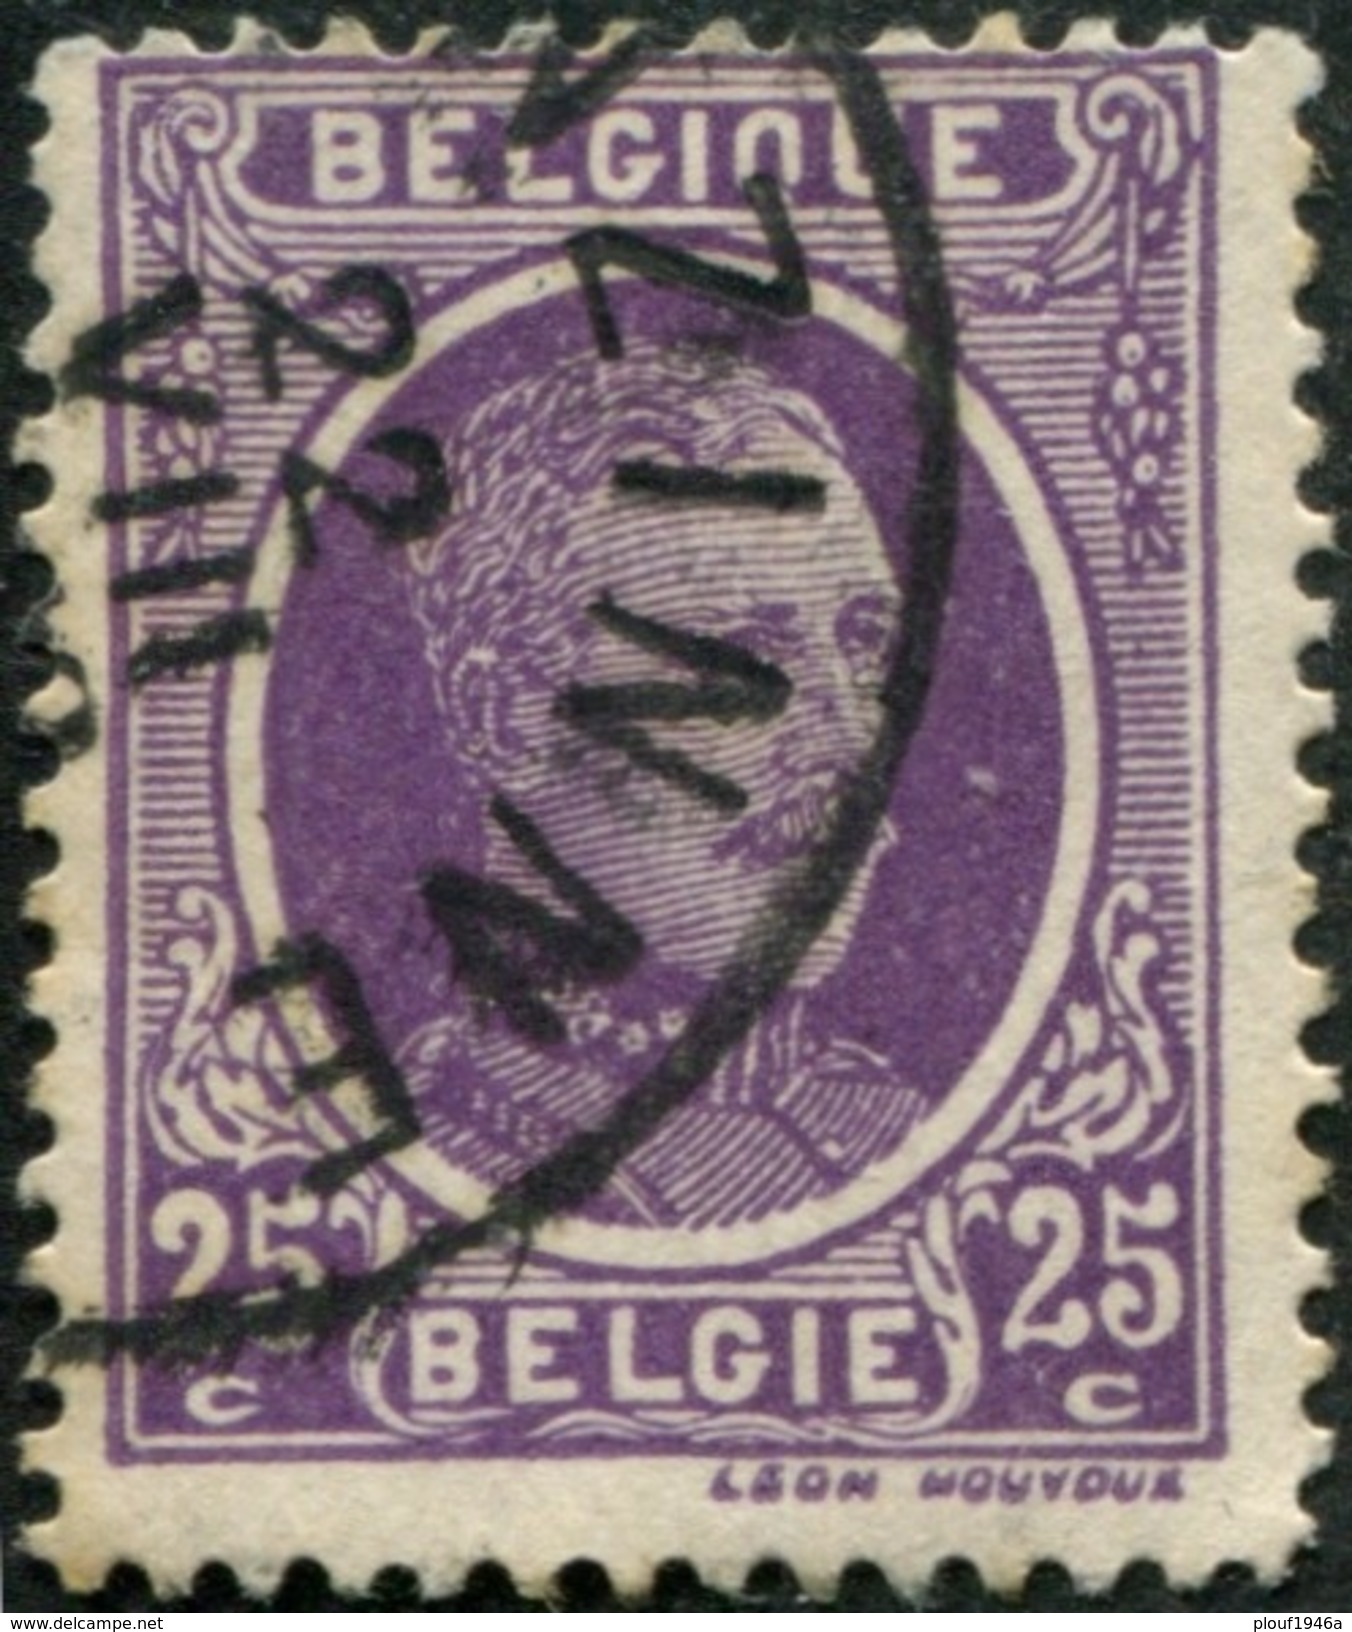 COB  198 -V23 (o) Coin Inférieur Droit Abîmé - 1901-1930